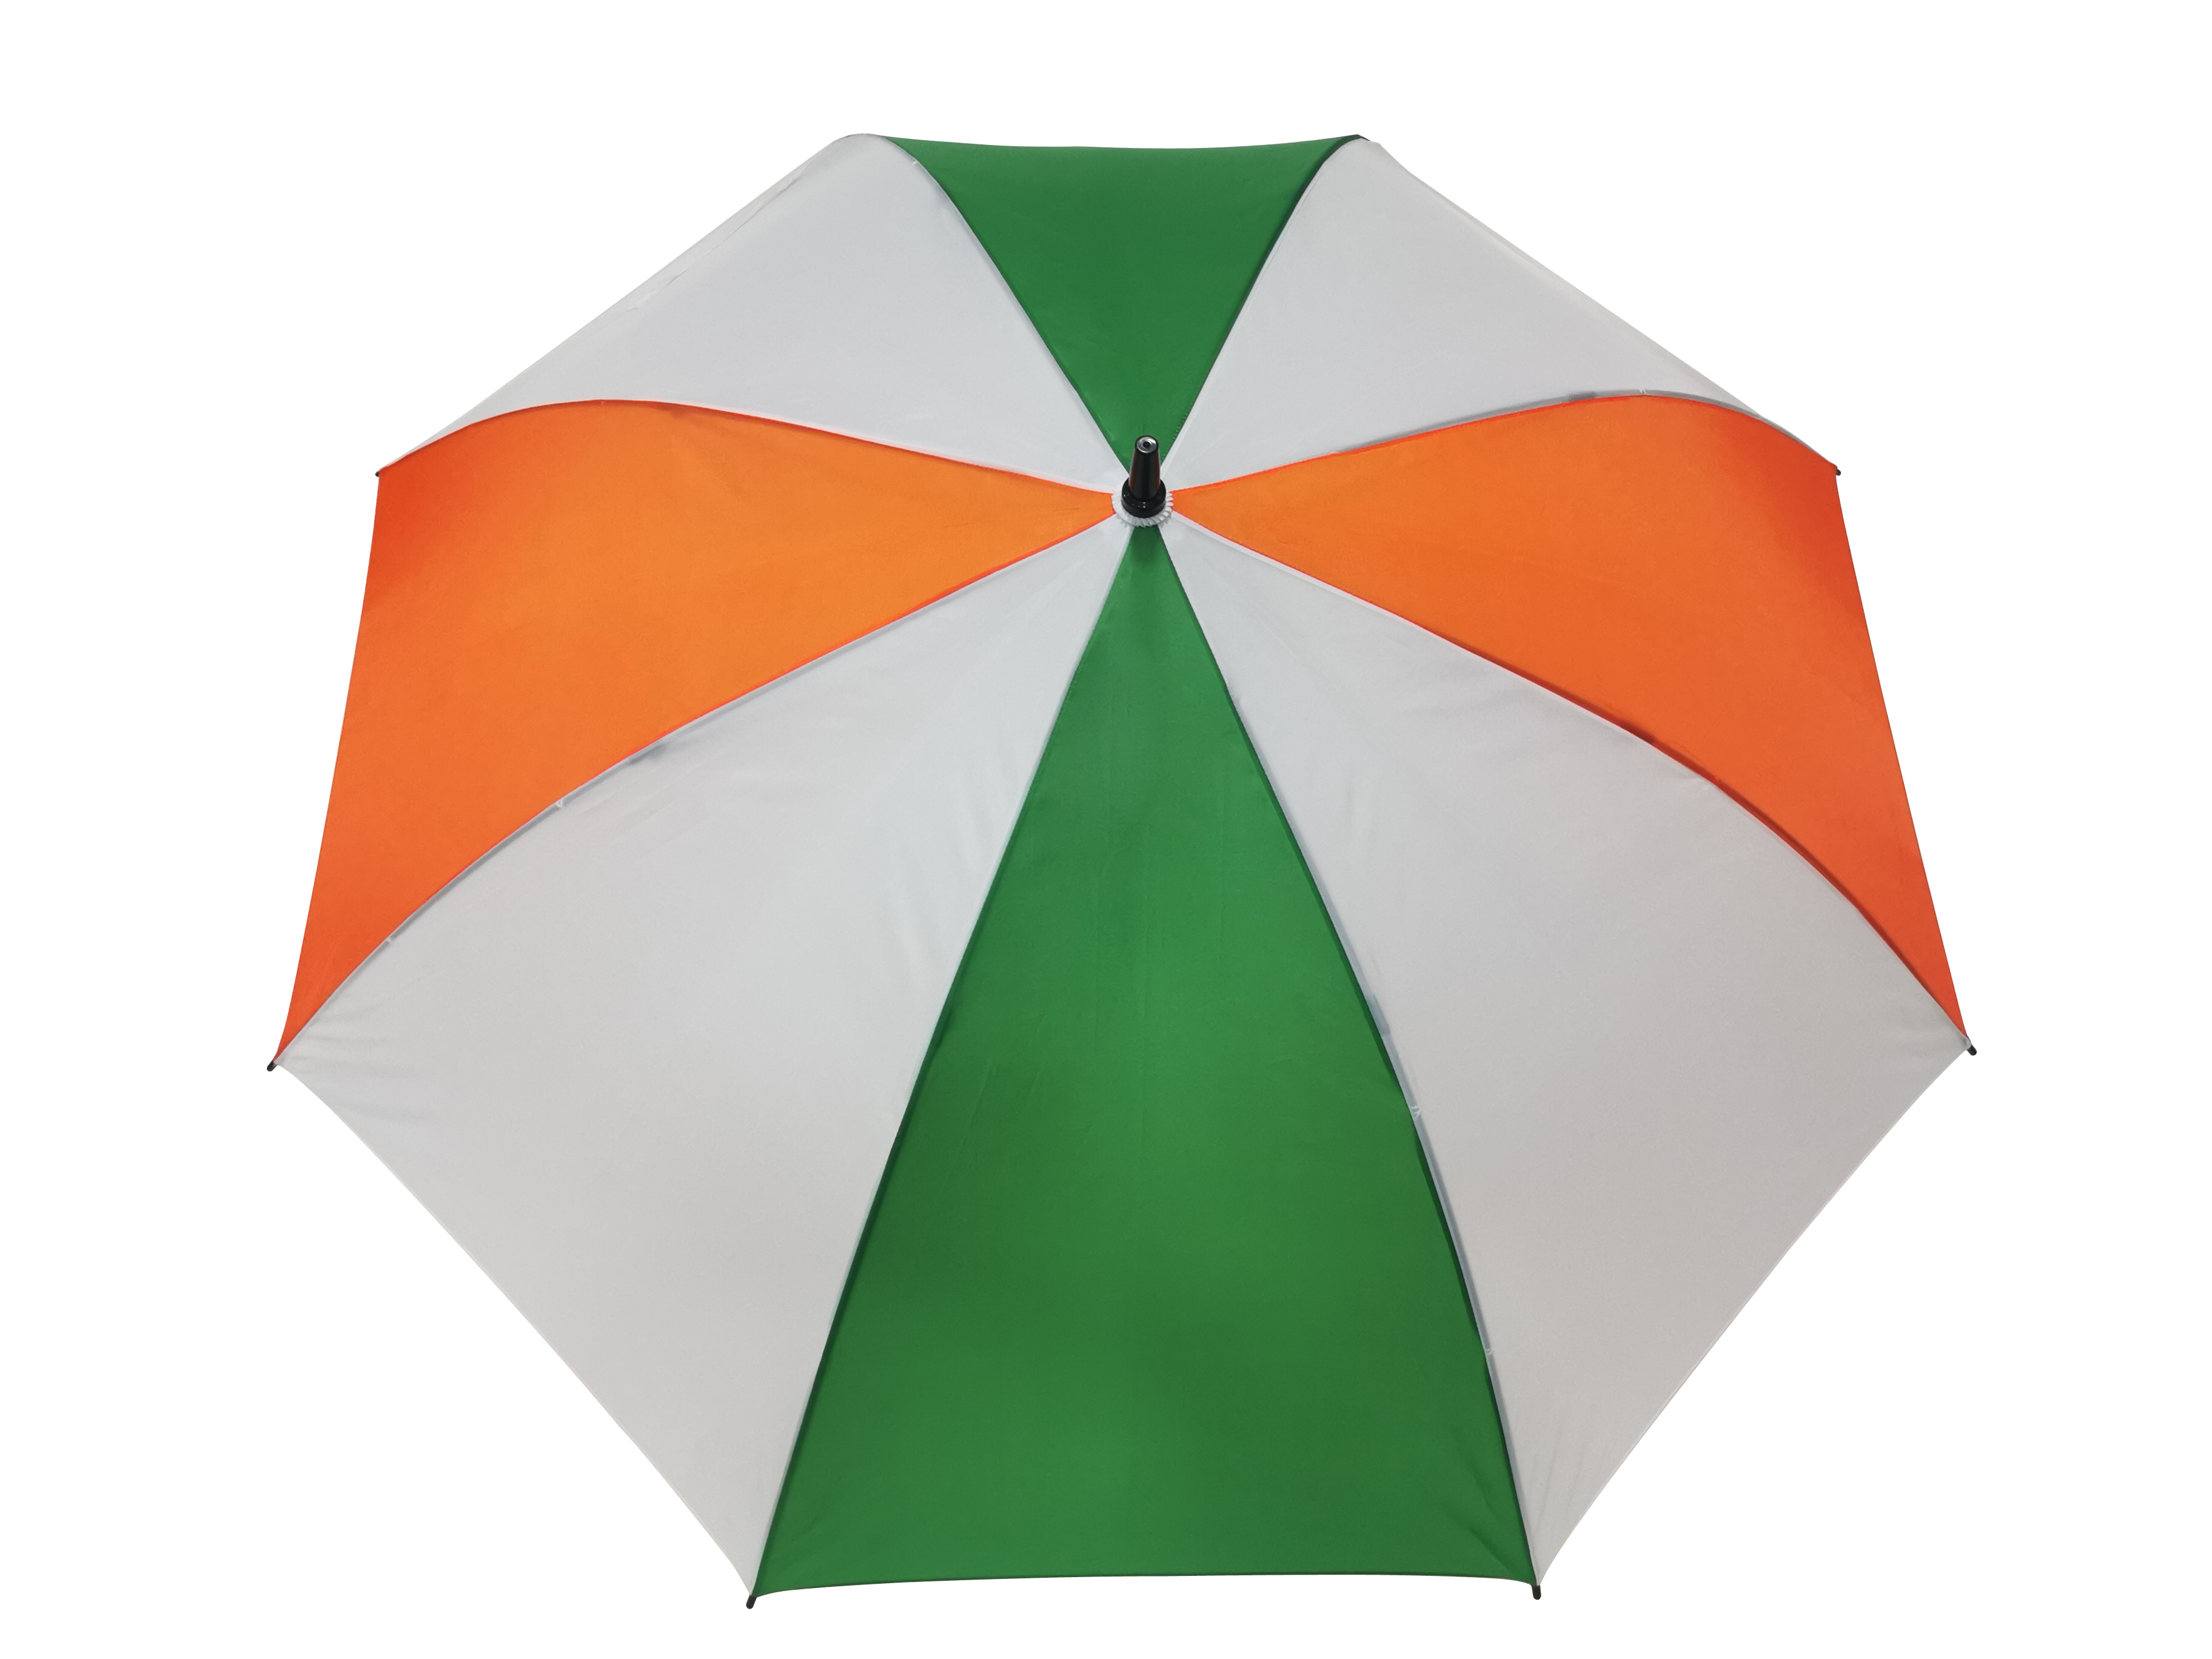 https://www.hodaumbrella.com/golf-ubrella-with-double-layer-umbrella-fabric-product/